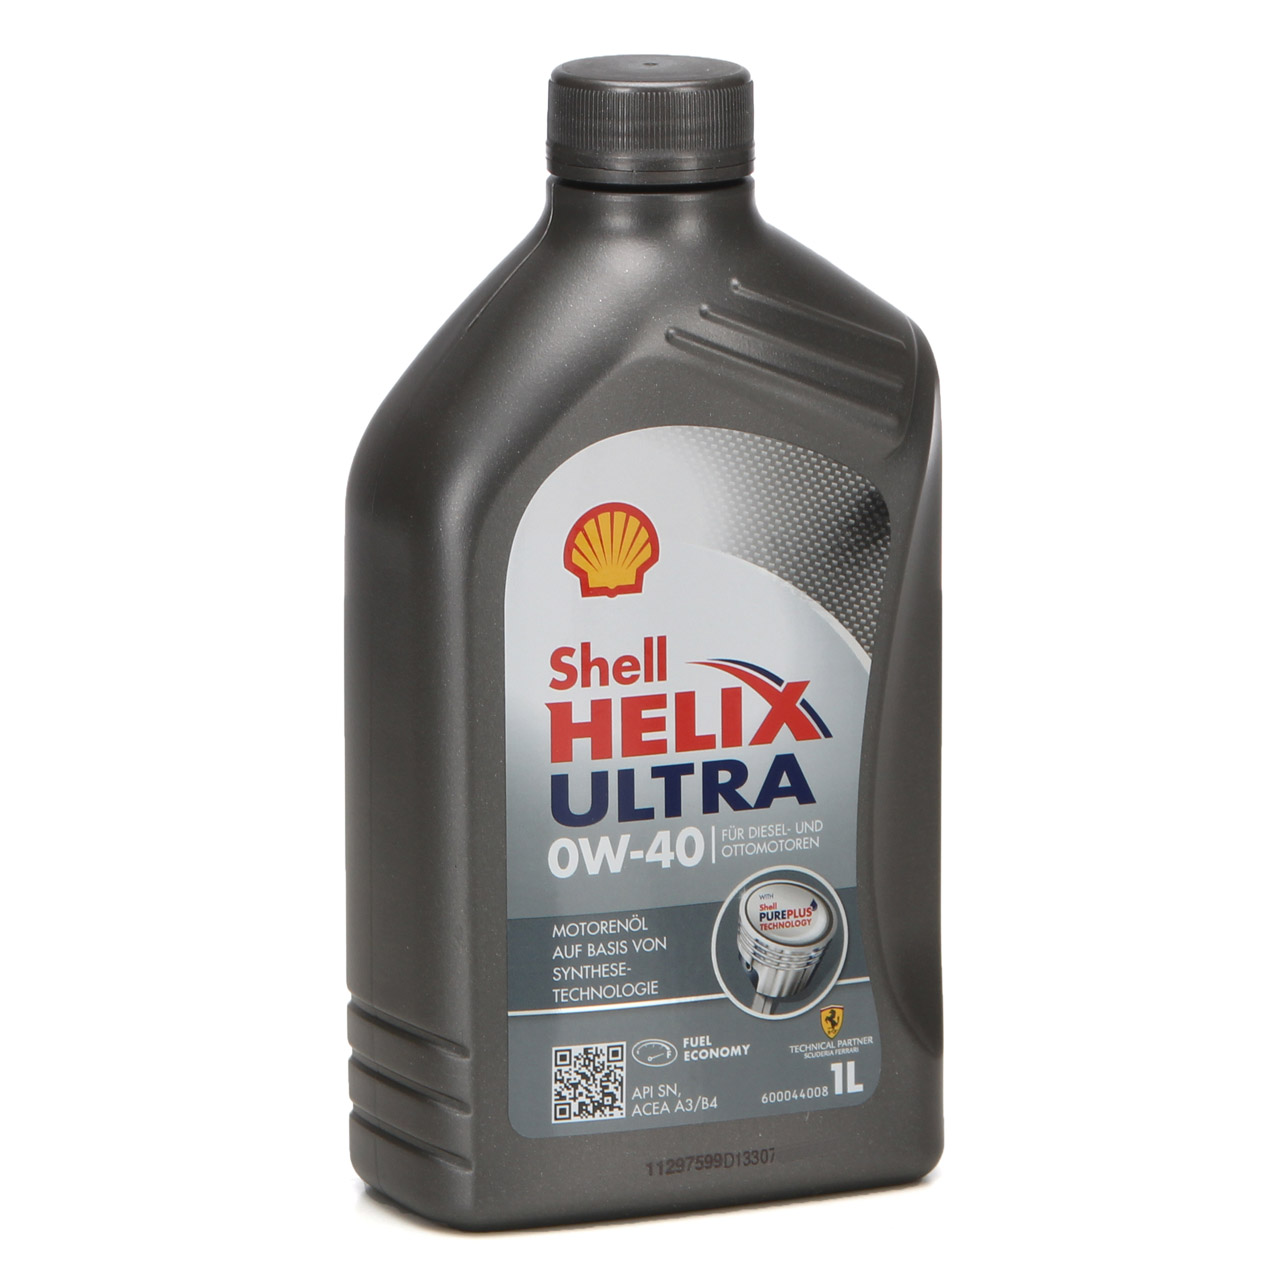 4x 1 Liter SHELL HELIX ULTRA 0W-40 Motoröl Öl MB 229.5/226.5 VW 502.00/505.00